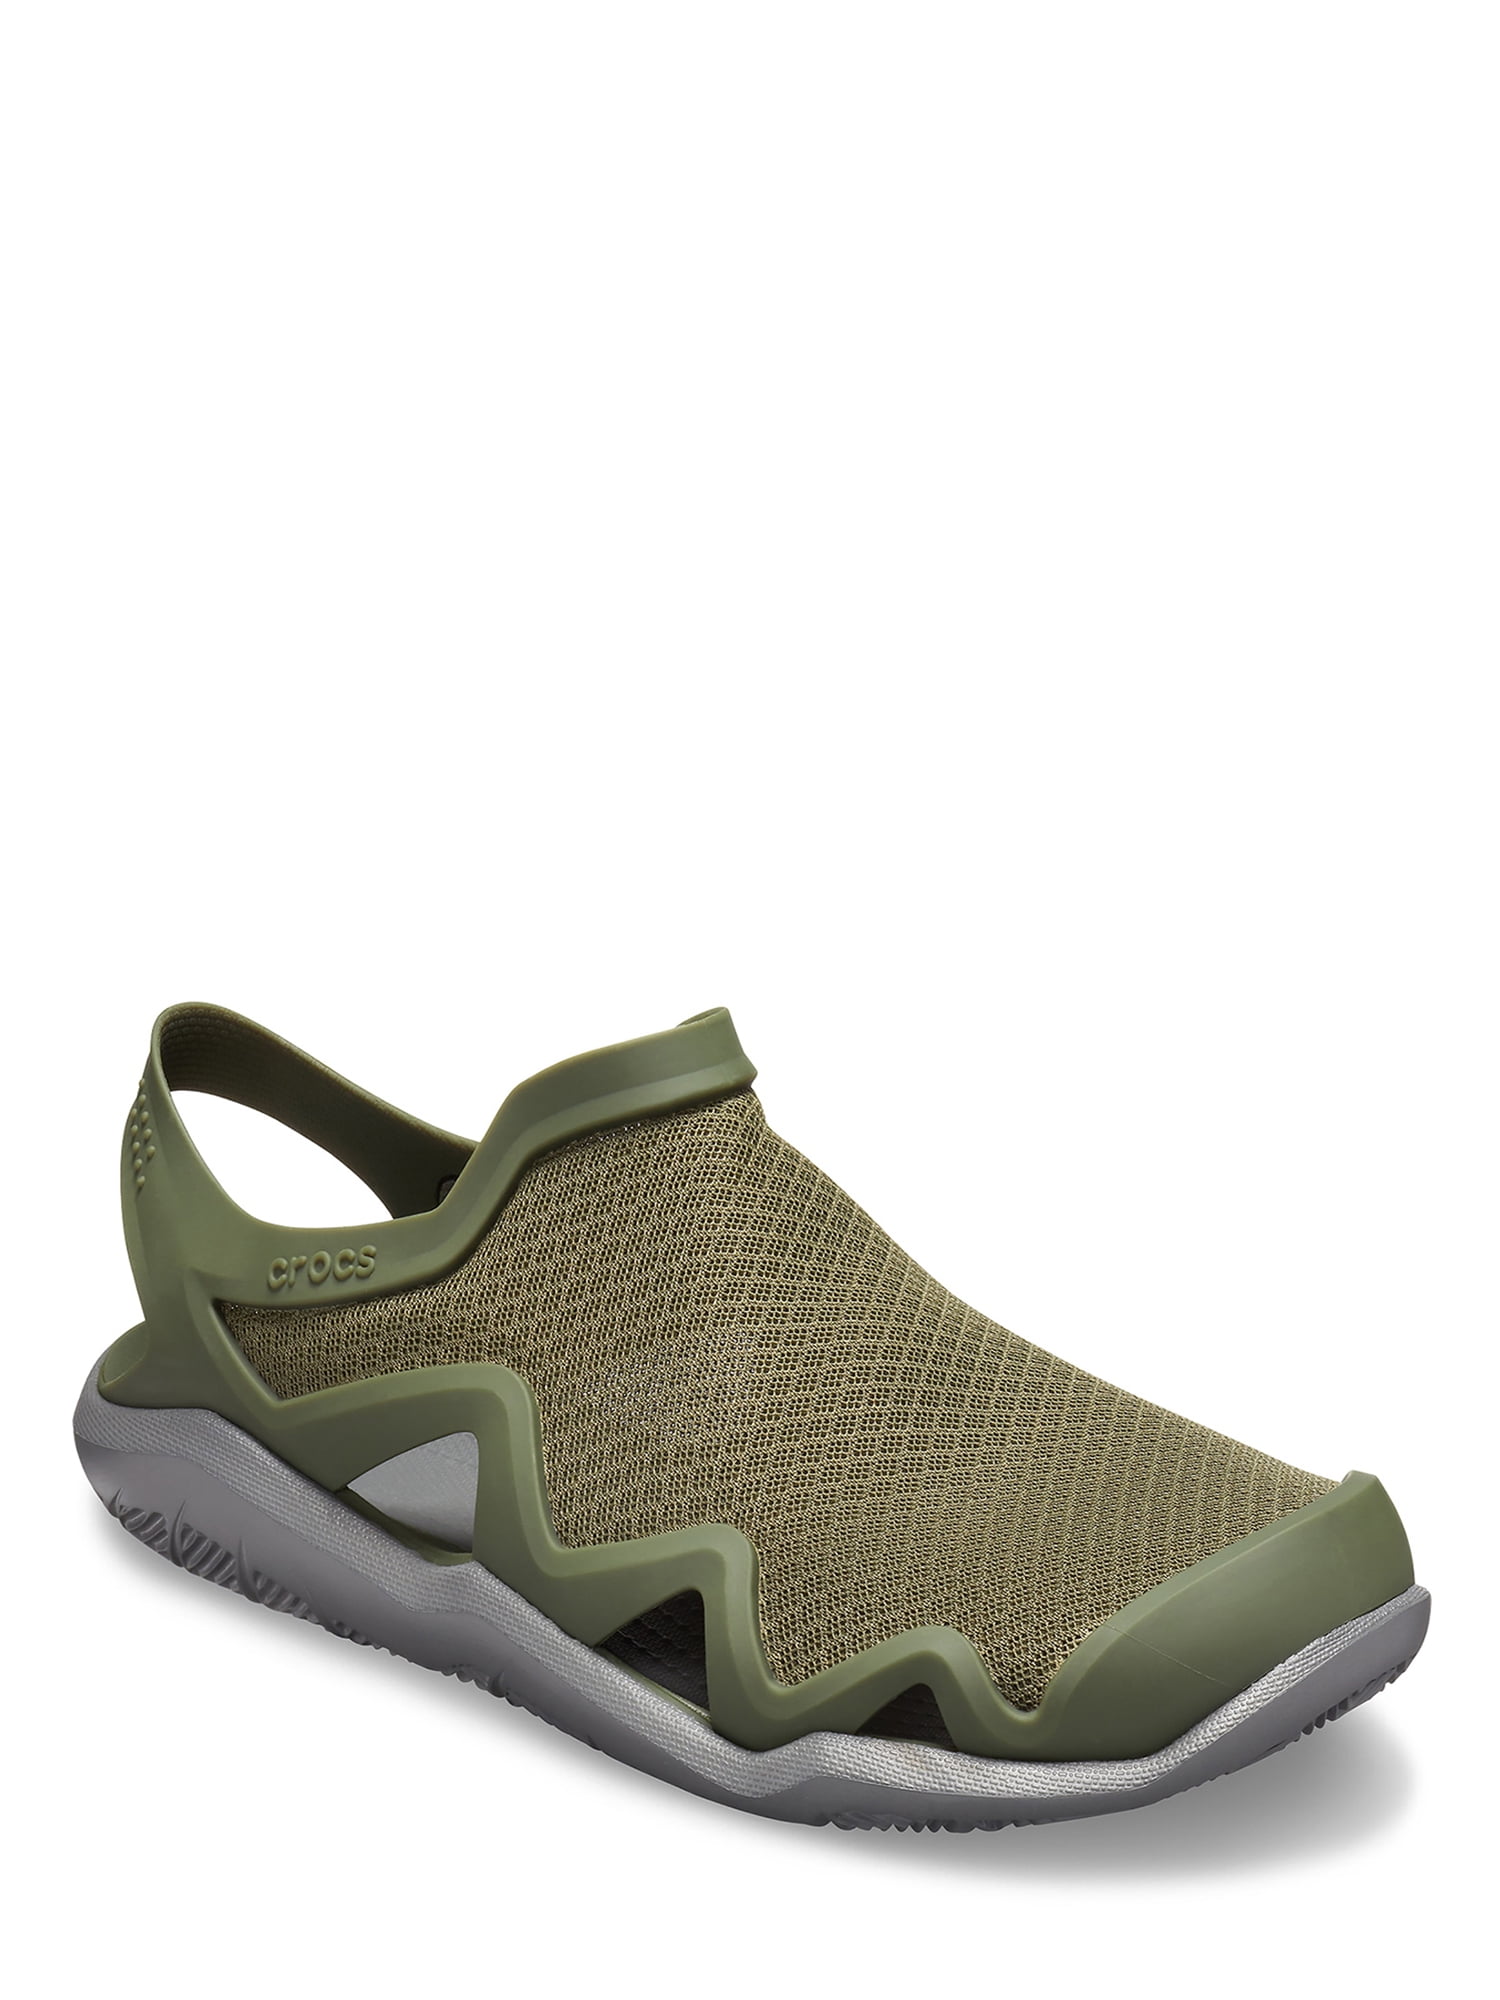 crocs swiftwater mesh sandals for ladies